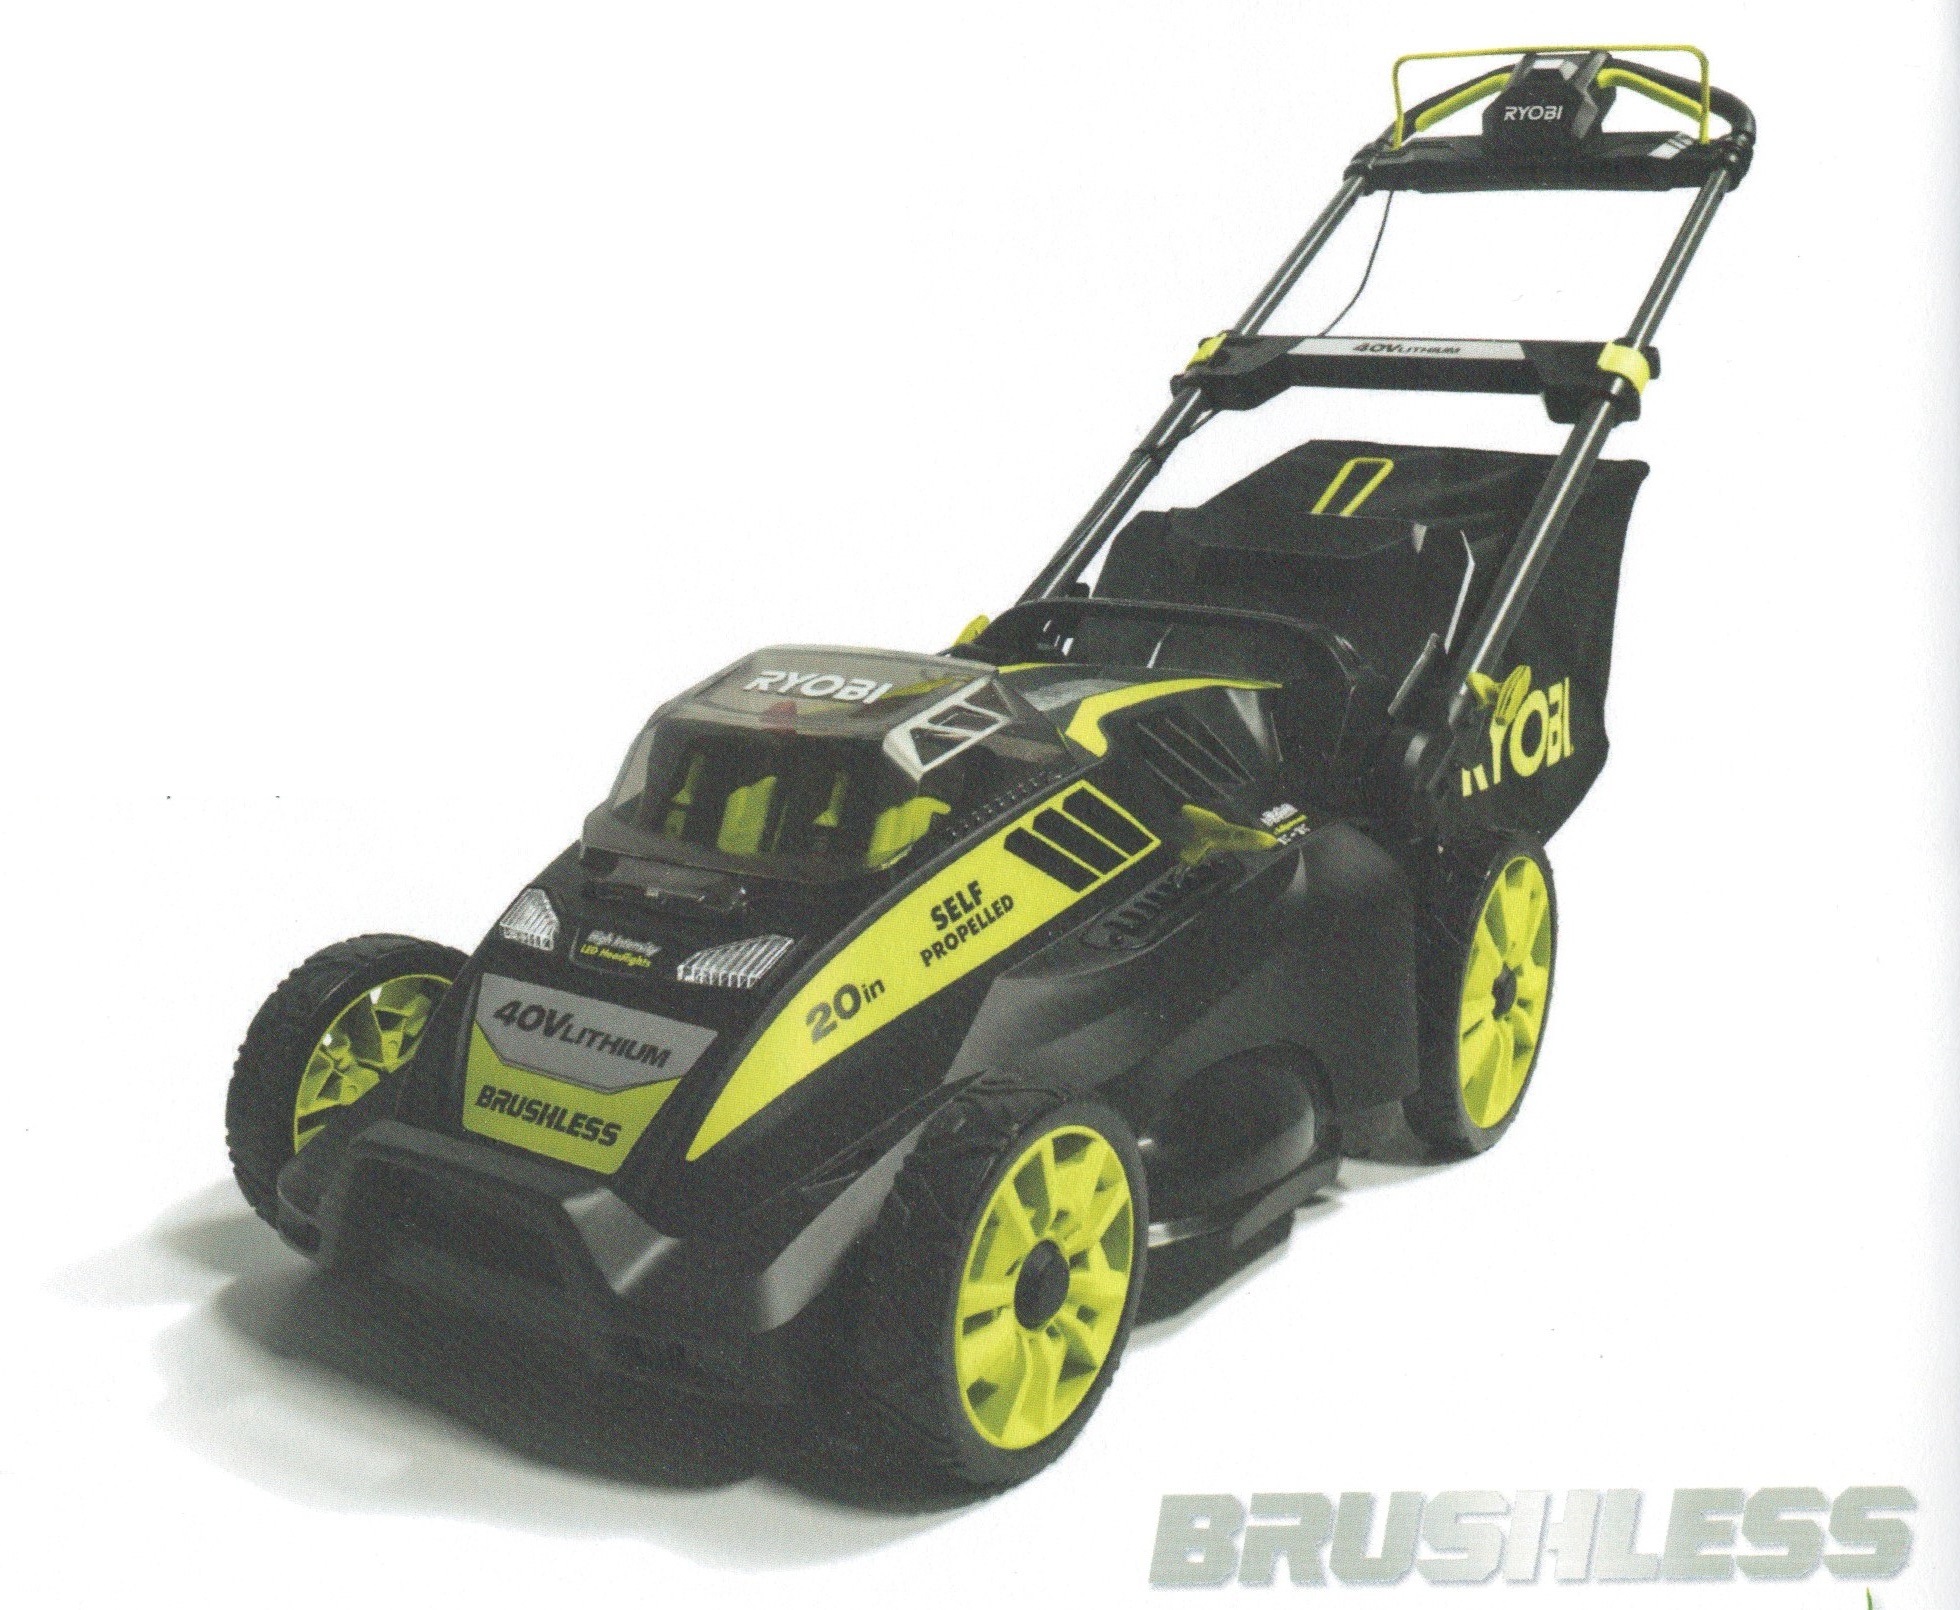 Ryobi 20-Inch Ry40190 Cordless Battery Self-Propelled Lawn Mower : RYOBI 40V 20-Inch Brushless Cordless SMART TREK Self ... - Wet grass, however, is not your friend.